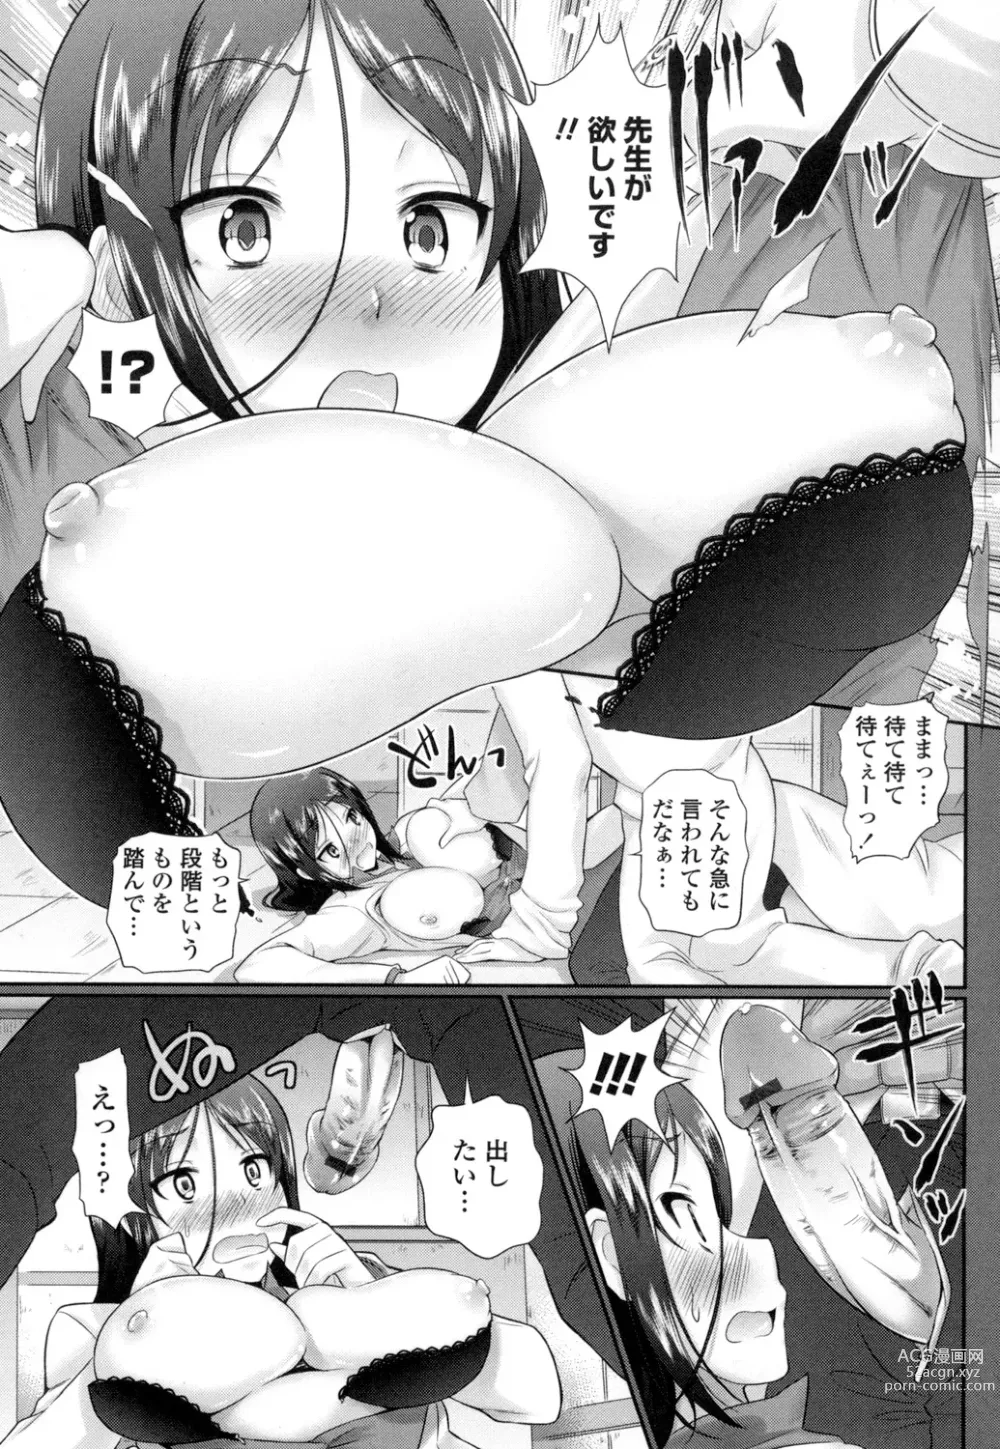 Page 196 of manga Oshiete Sensei